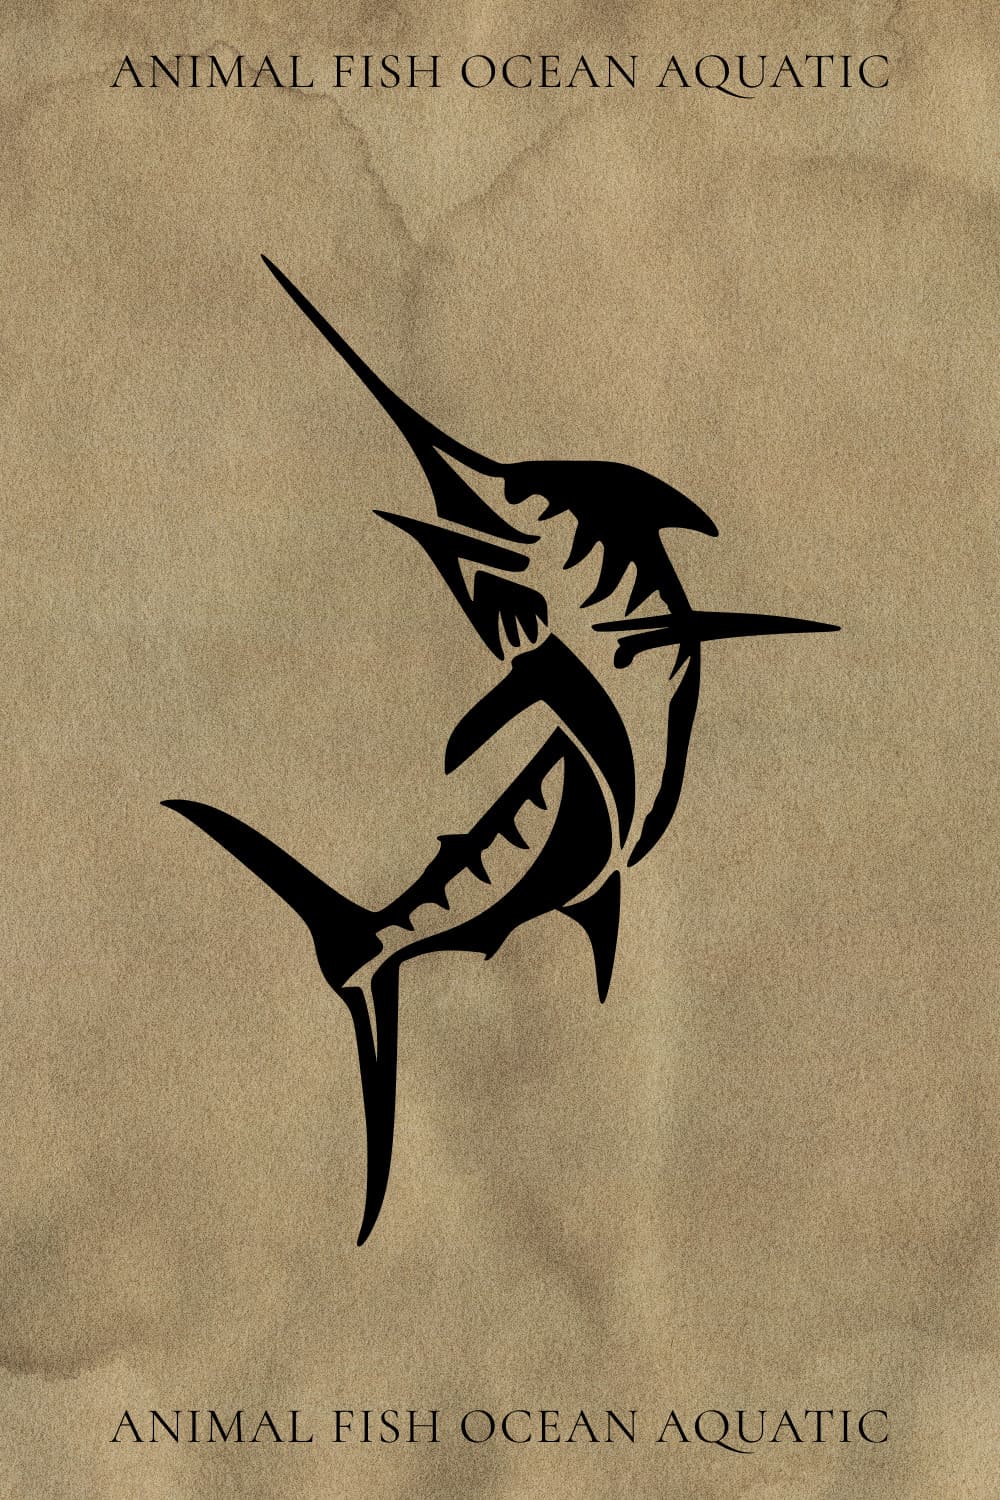 Animal Fish Ocean Aquatic - Pinterest Image.